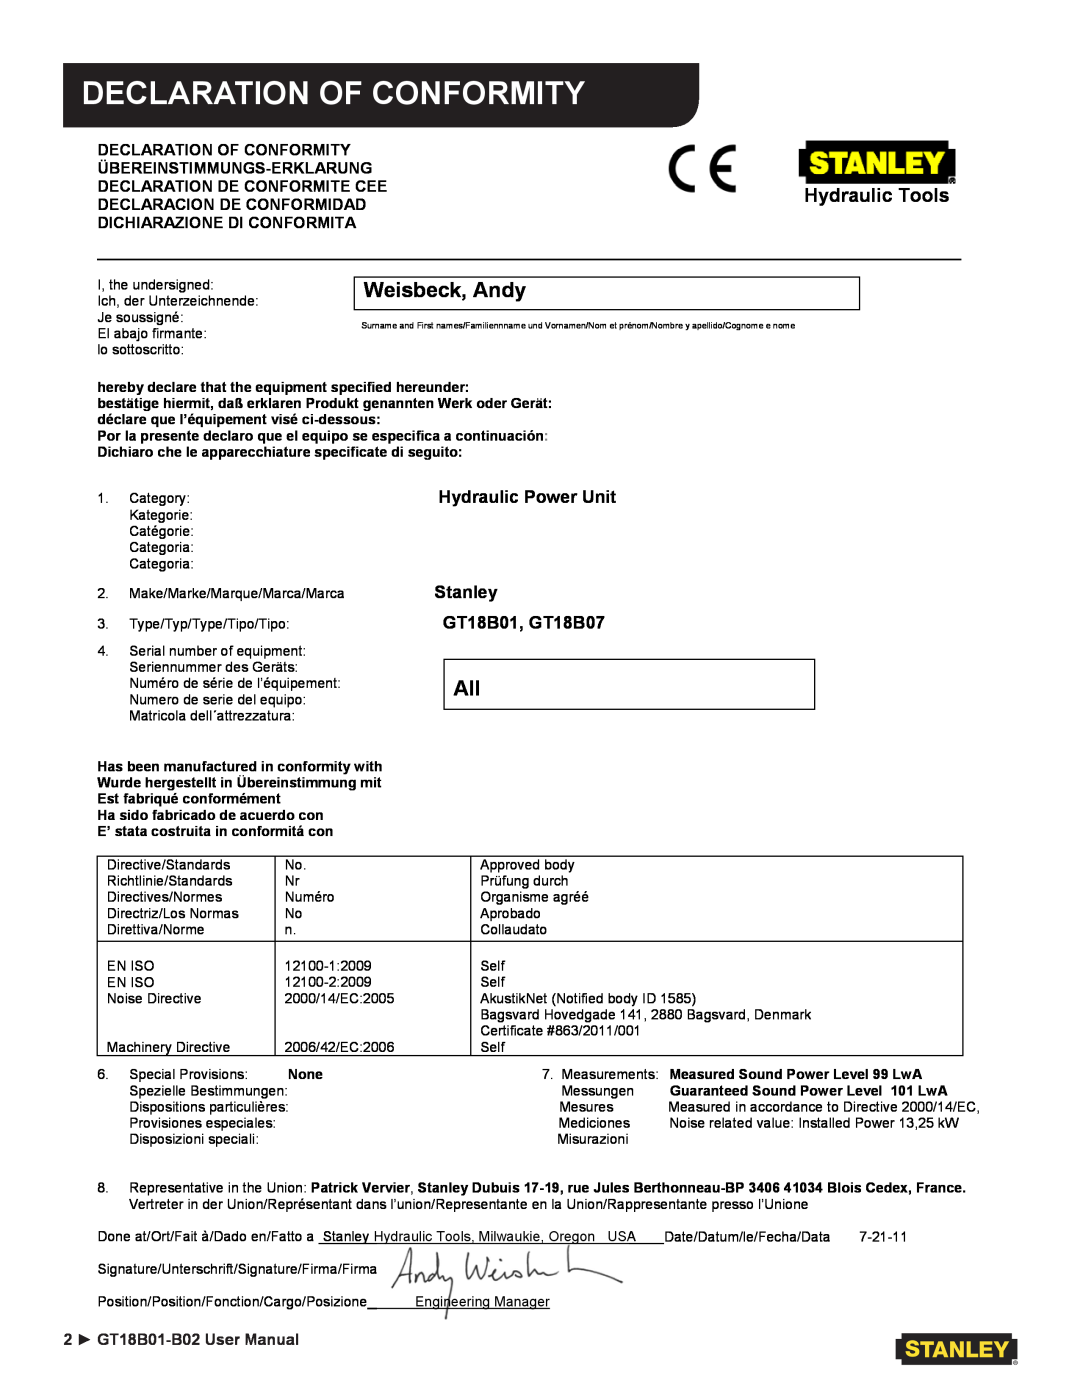 Stanley Black & Decker GT18B02 user manual Declarationrtificate Ofofconformity, Weisbeck, Andy, 2 GT18B01-B02 User Manual 